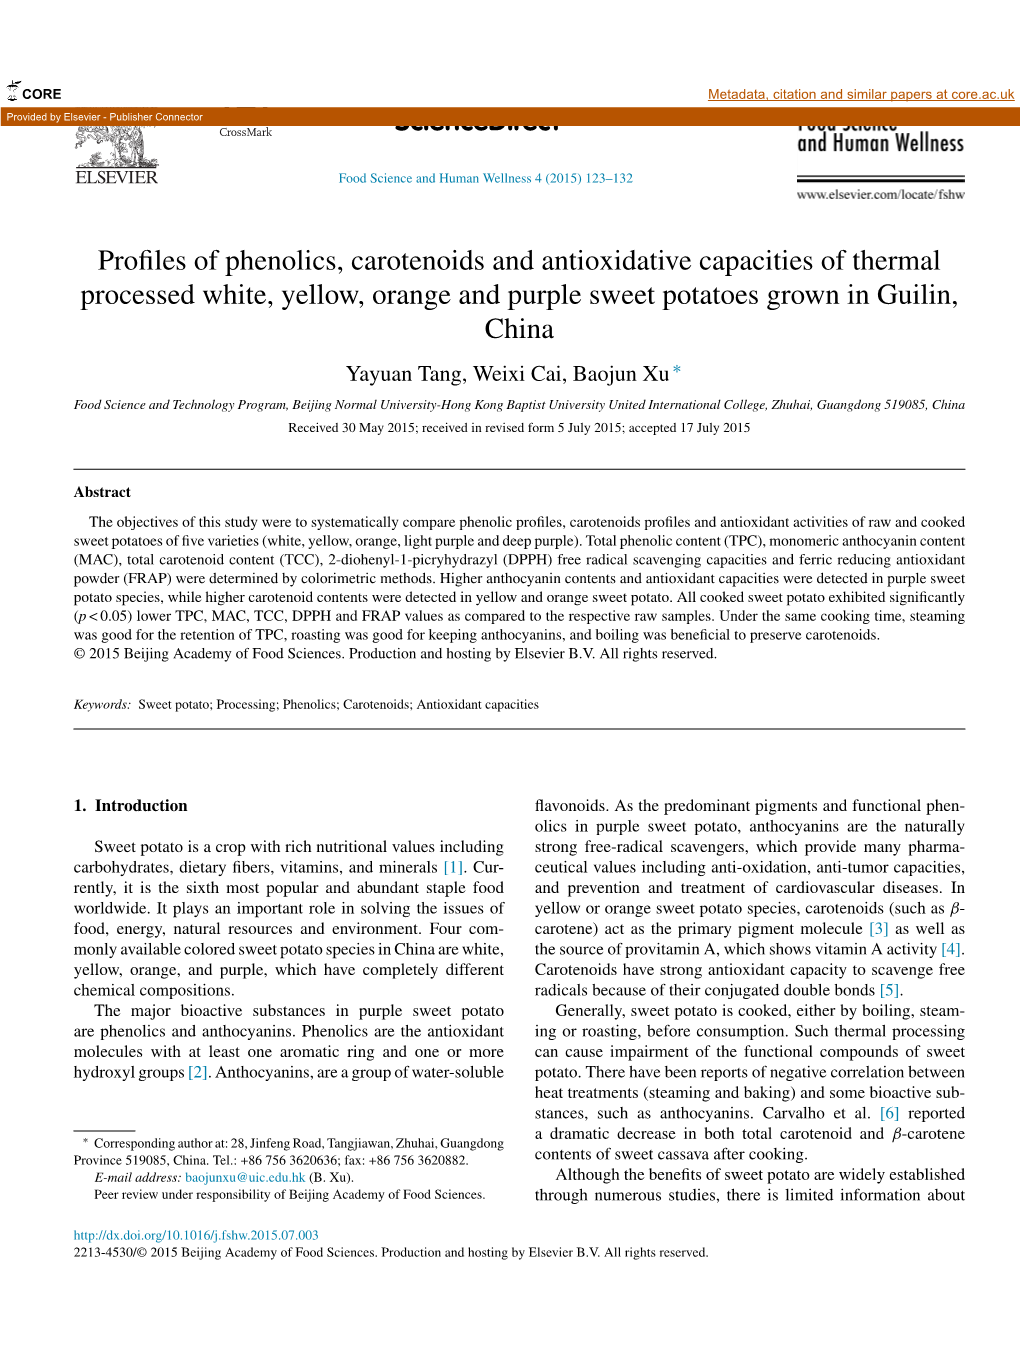 Profiles of Phenolics, Carotenoids and Antioxidative Capacities of Thermal